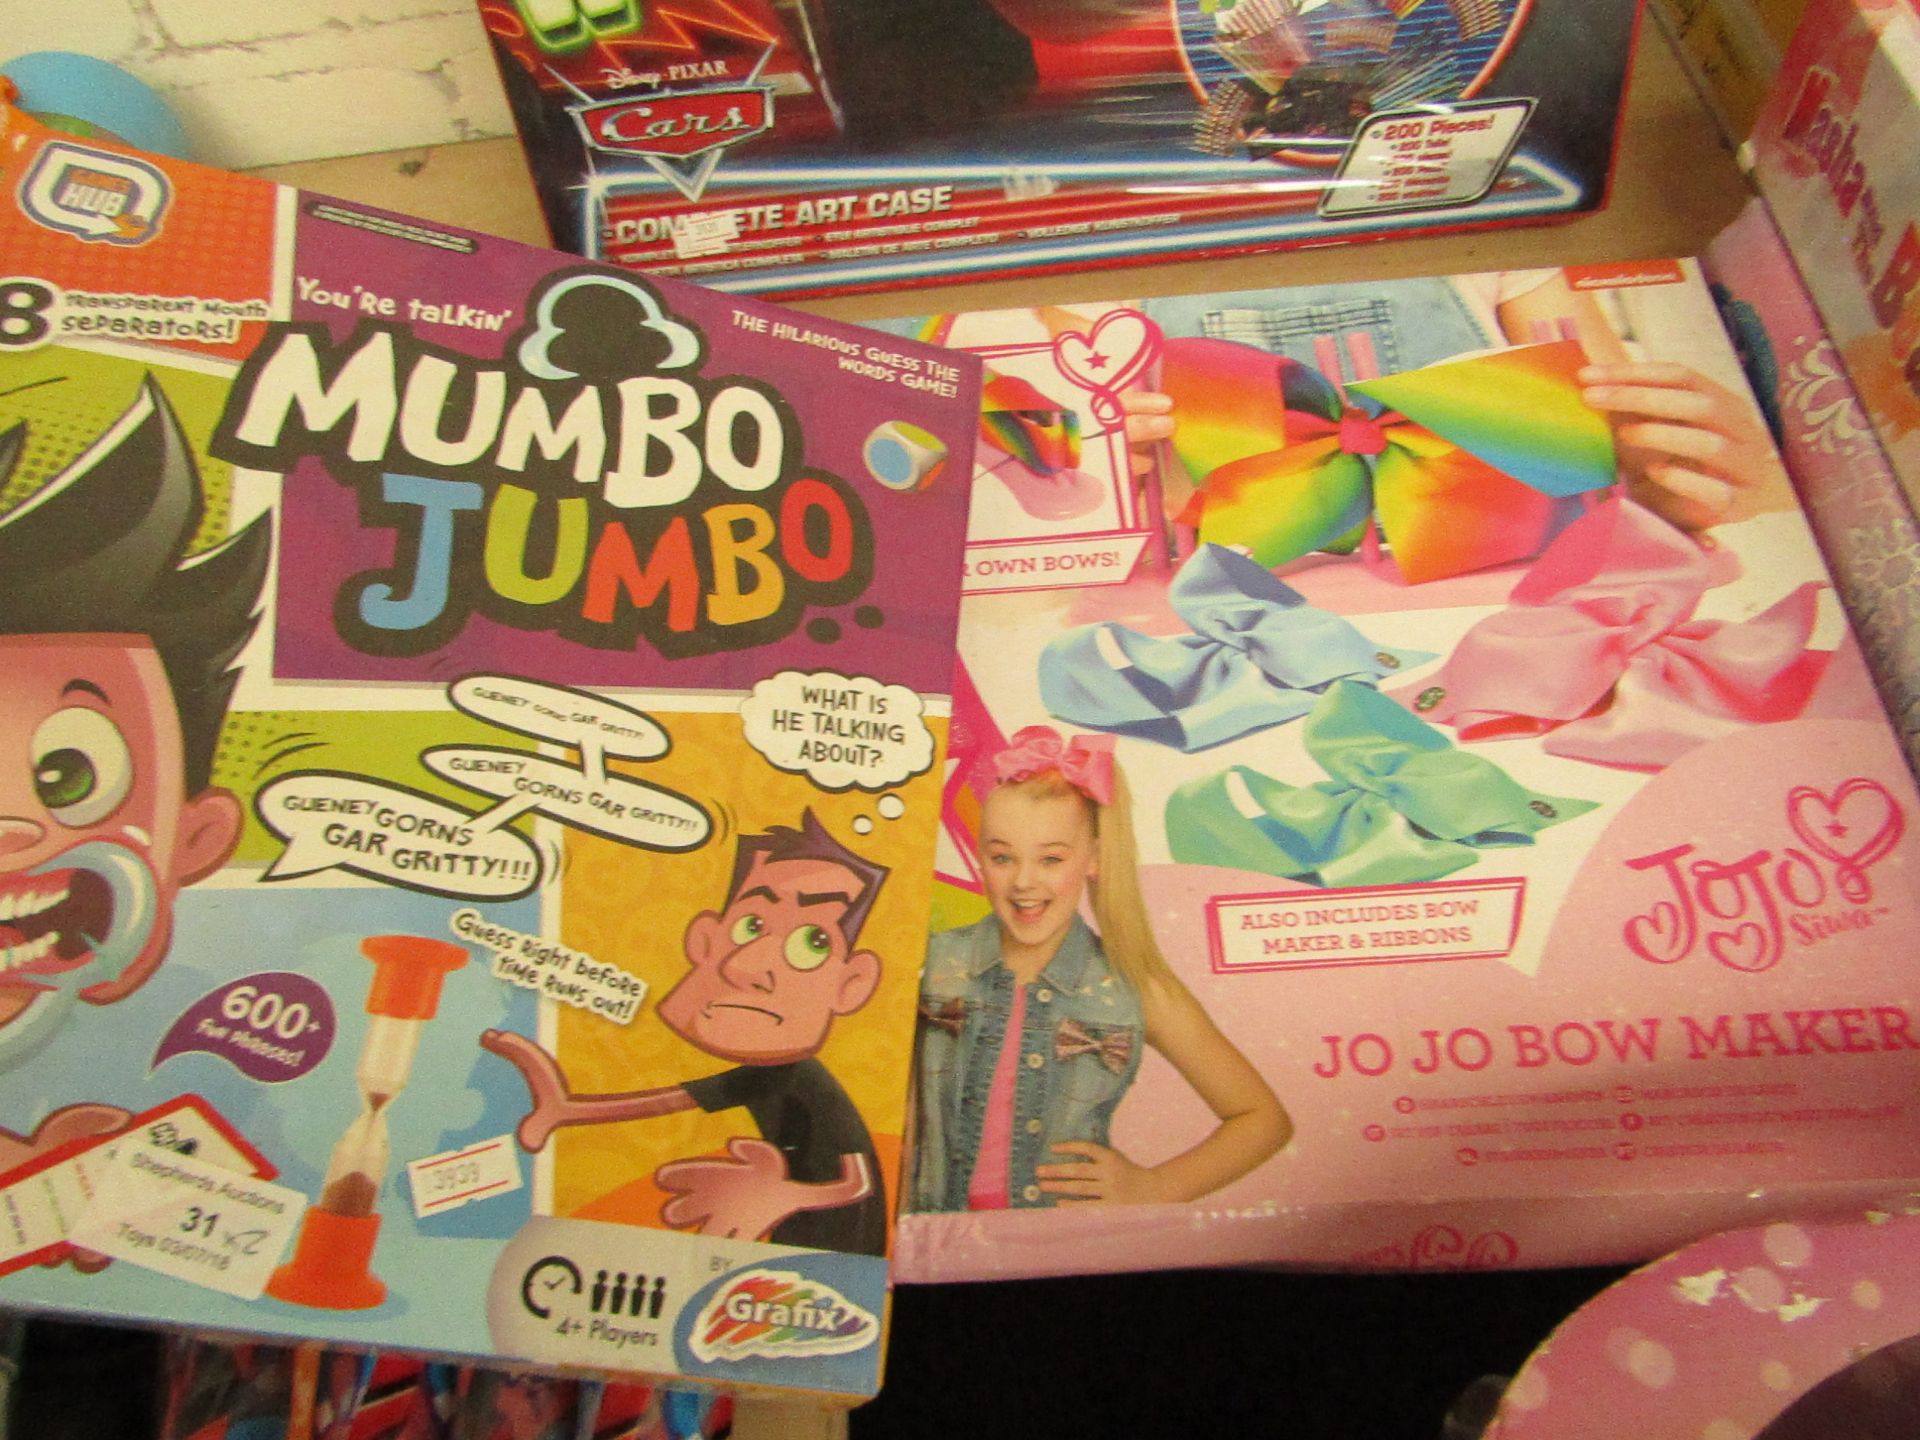 2x Items being.   - Mumbo Jumbo card / board game, boxed.   - Jojo Siwa bow making kit, boxed.